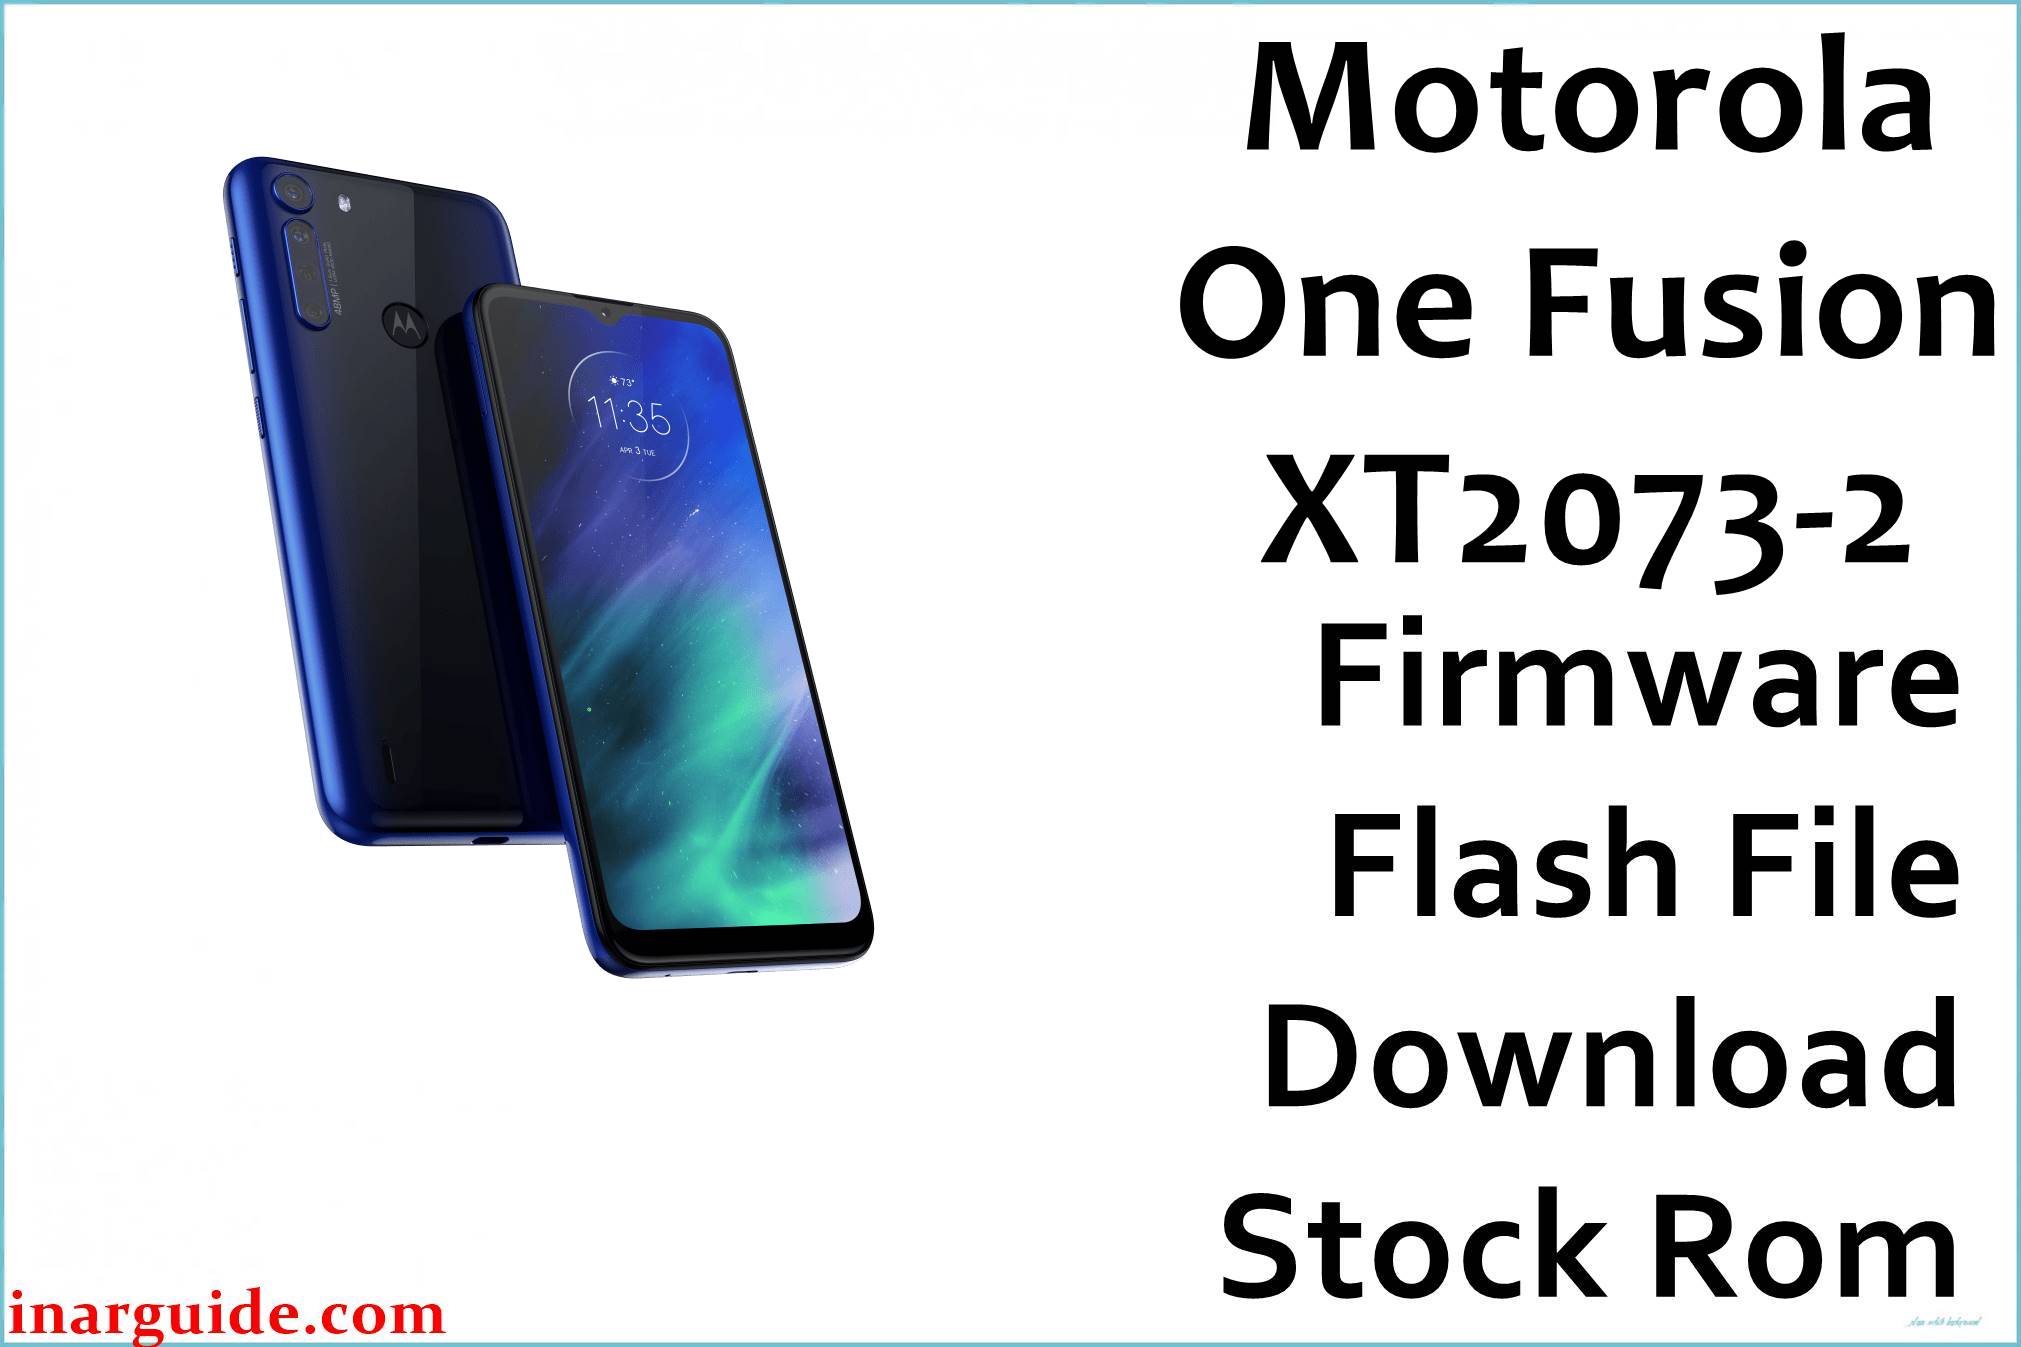 Motorola One Fusion XT2073-2